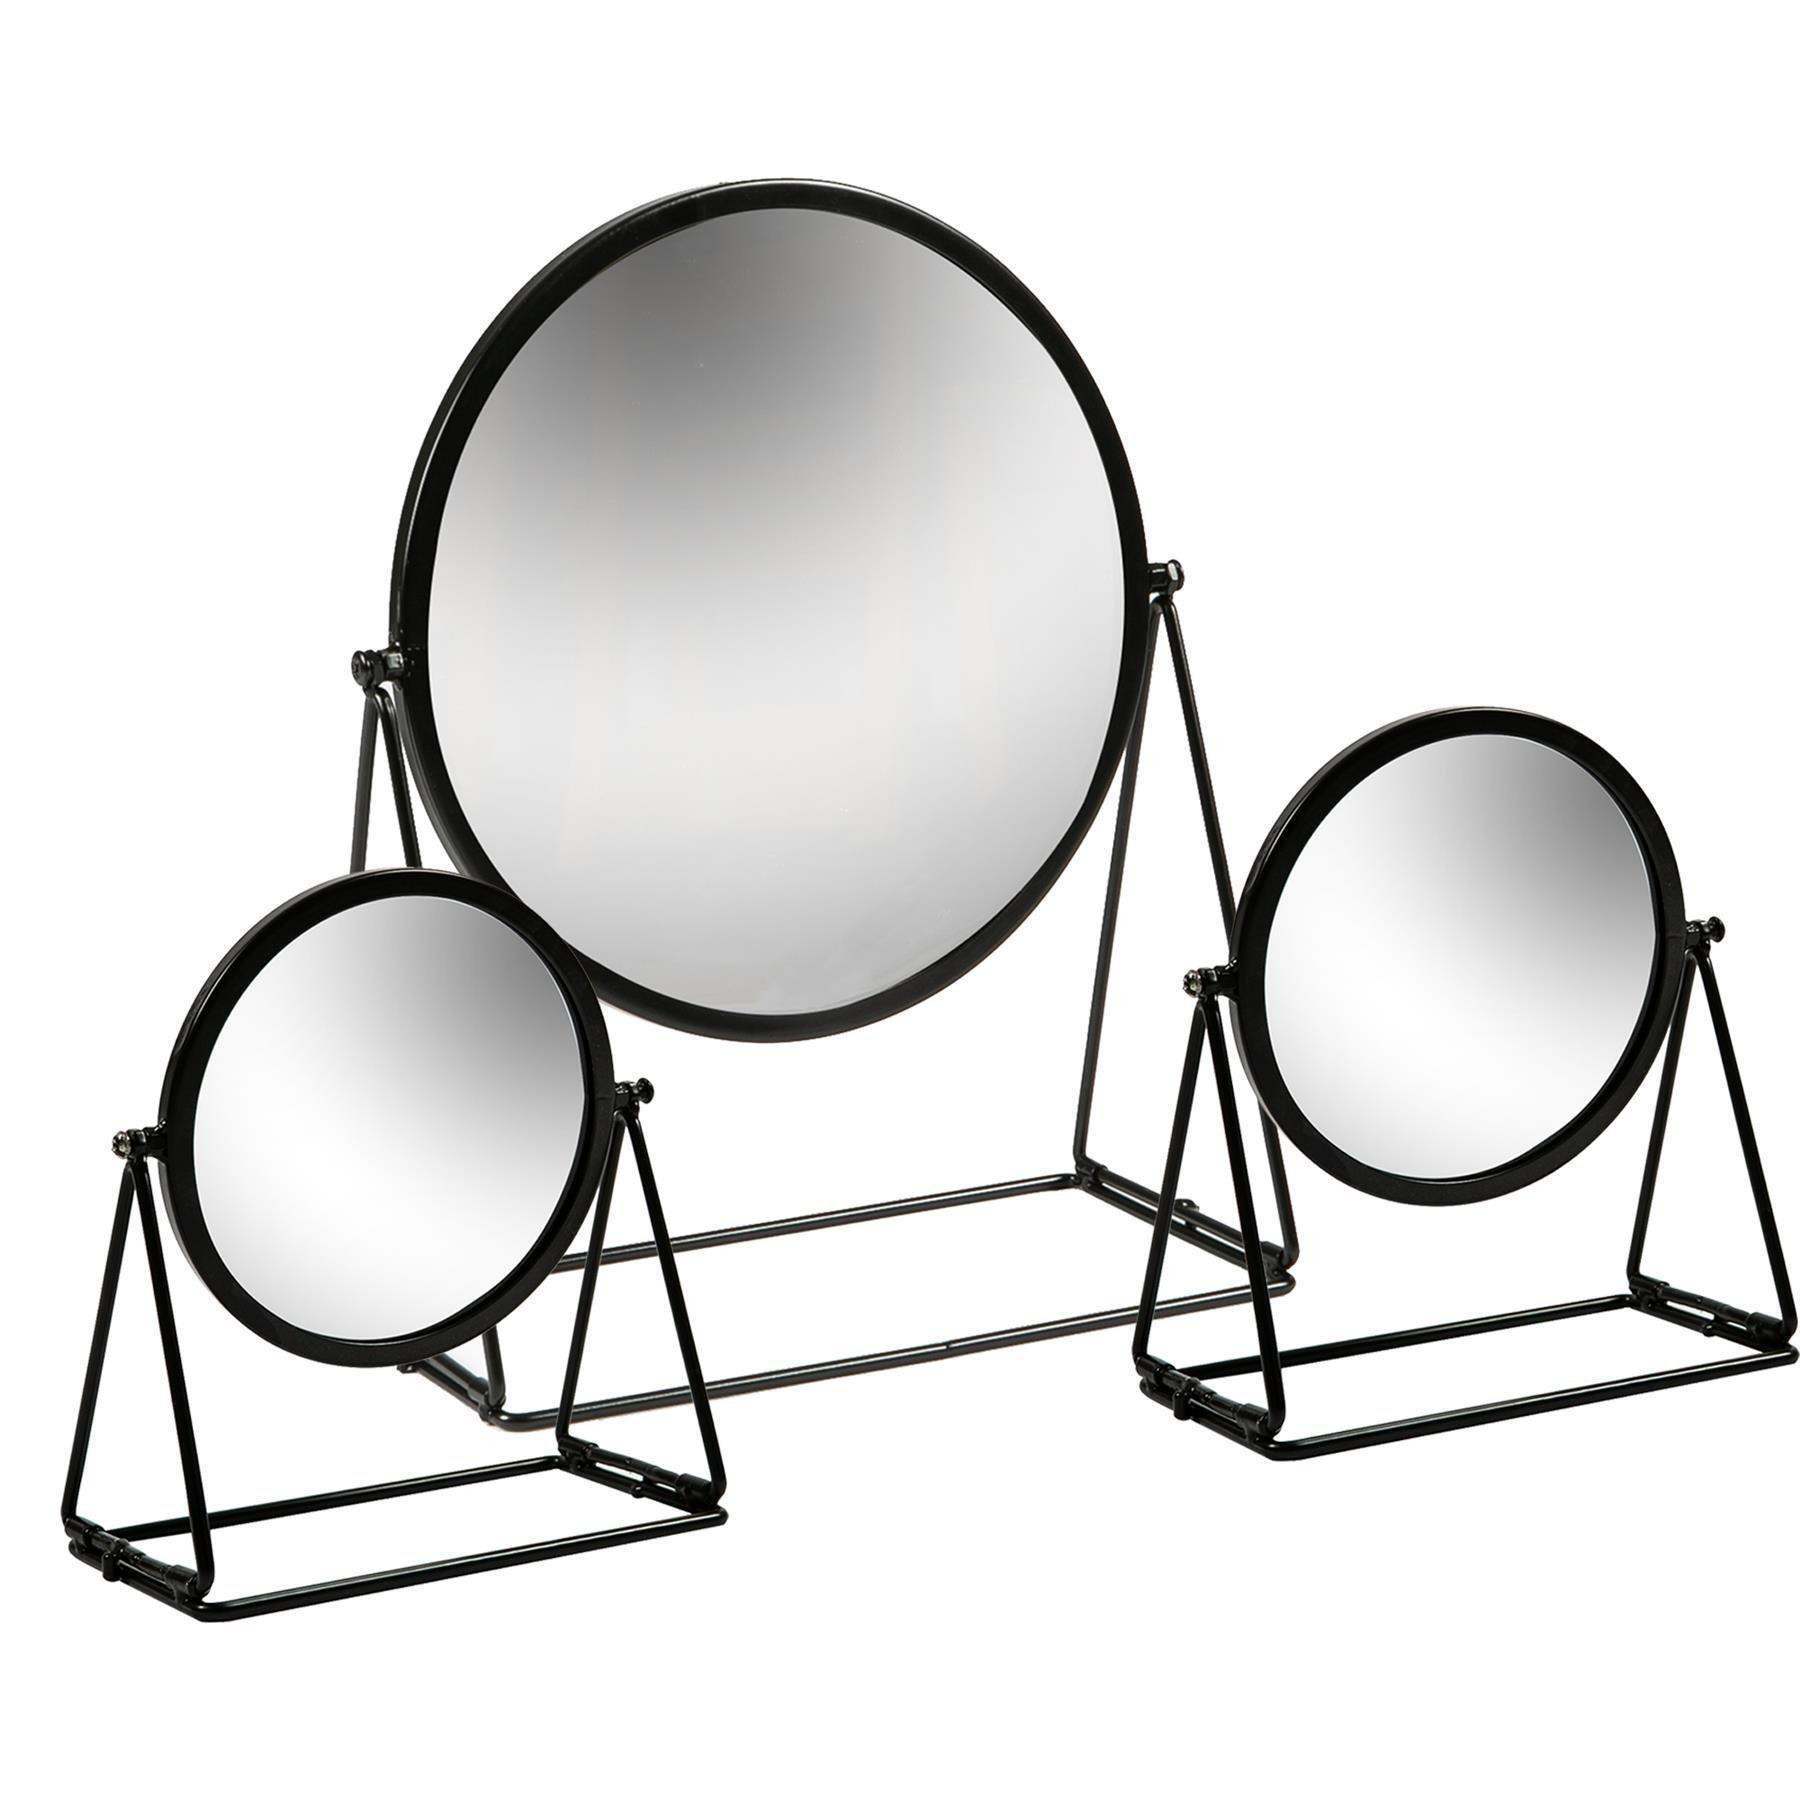 3 Piece Round Dressing Table Mirror Set - 2 Sizes - Black - image 1